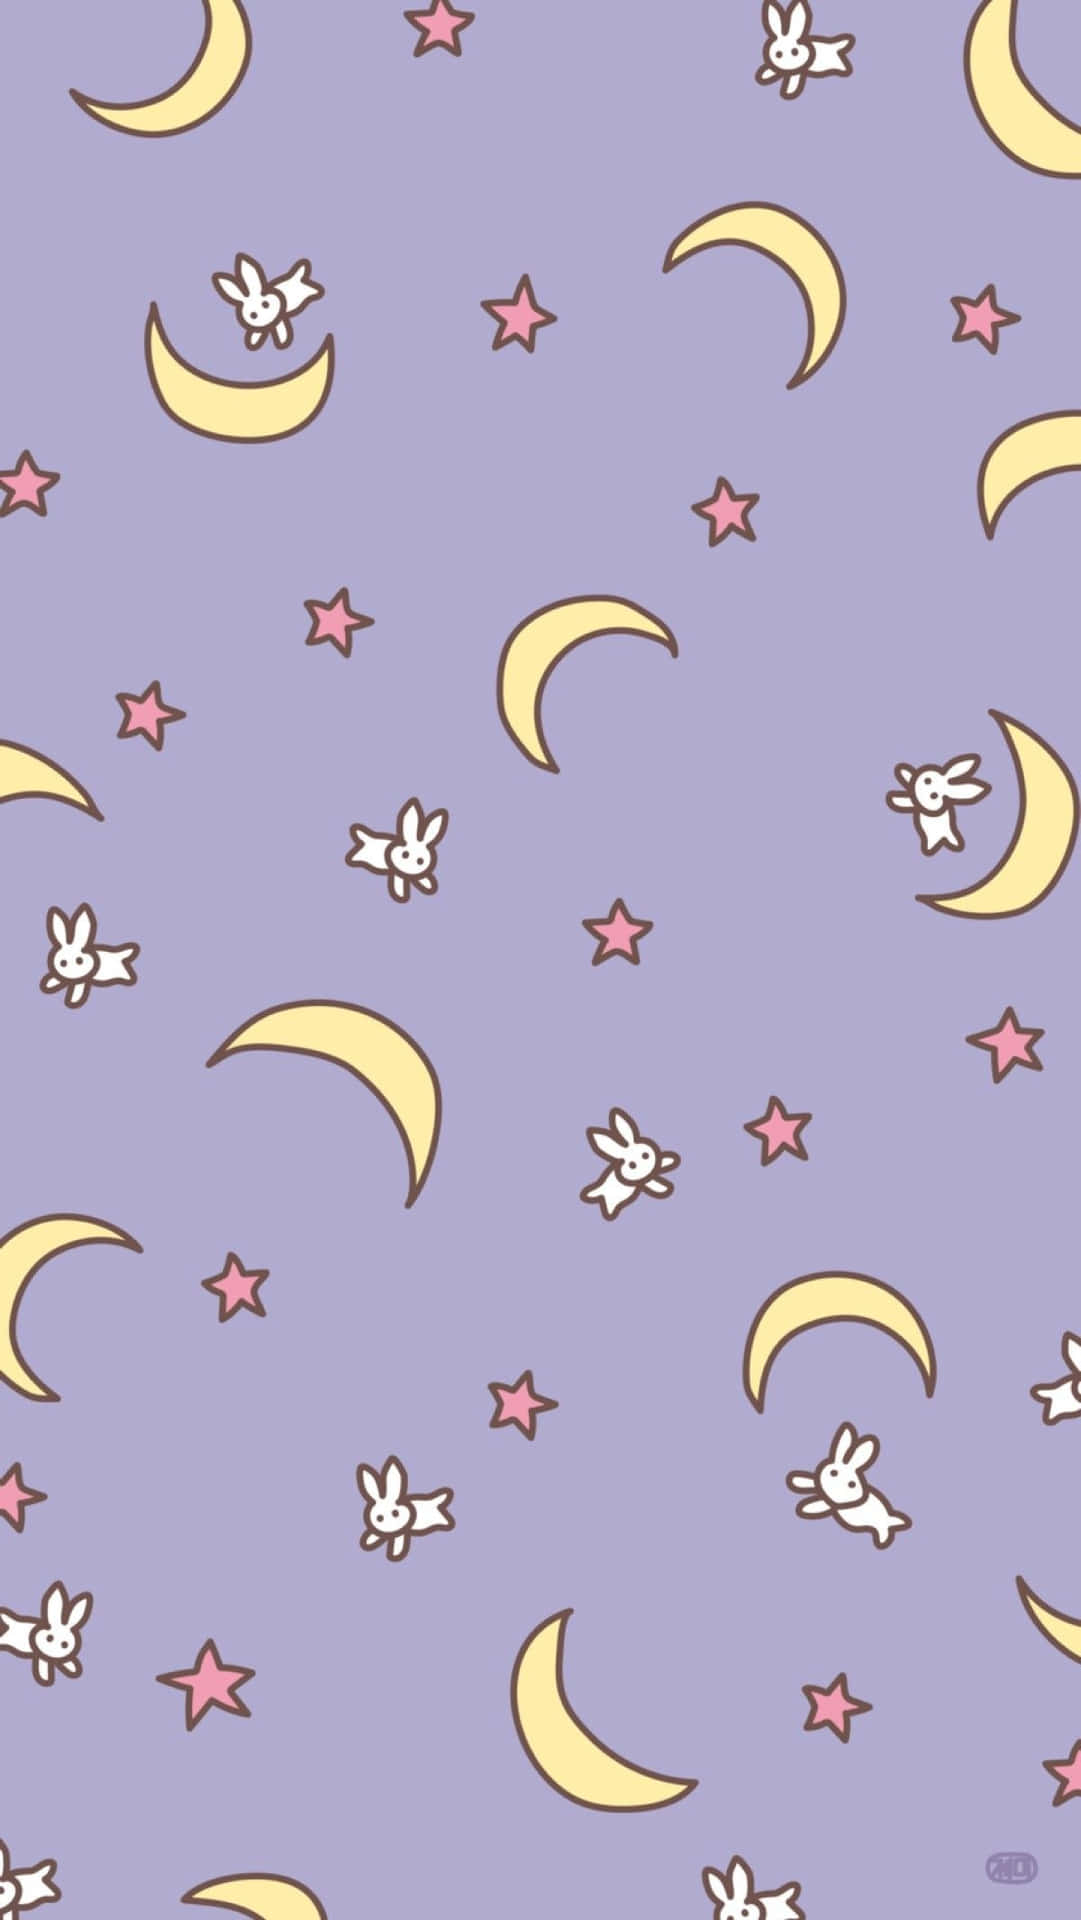 Bunny Star Moon Sailor Moon Pattern Wallpaper